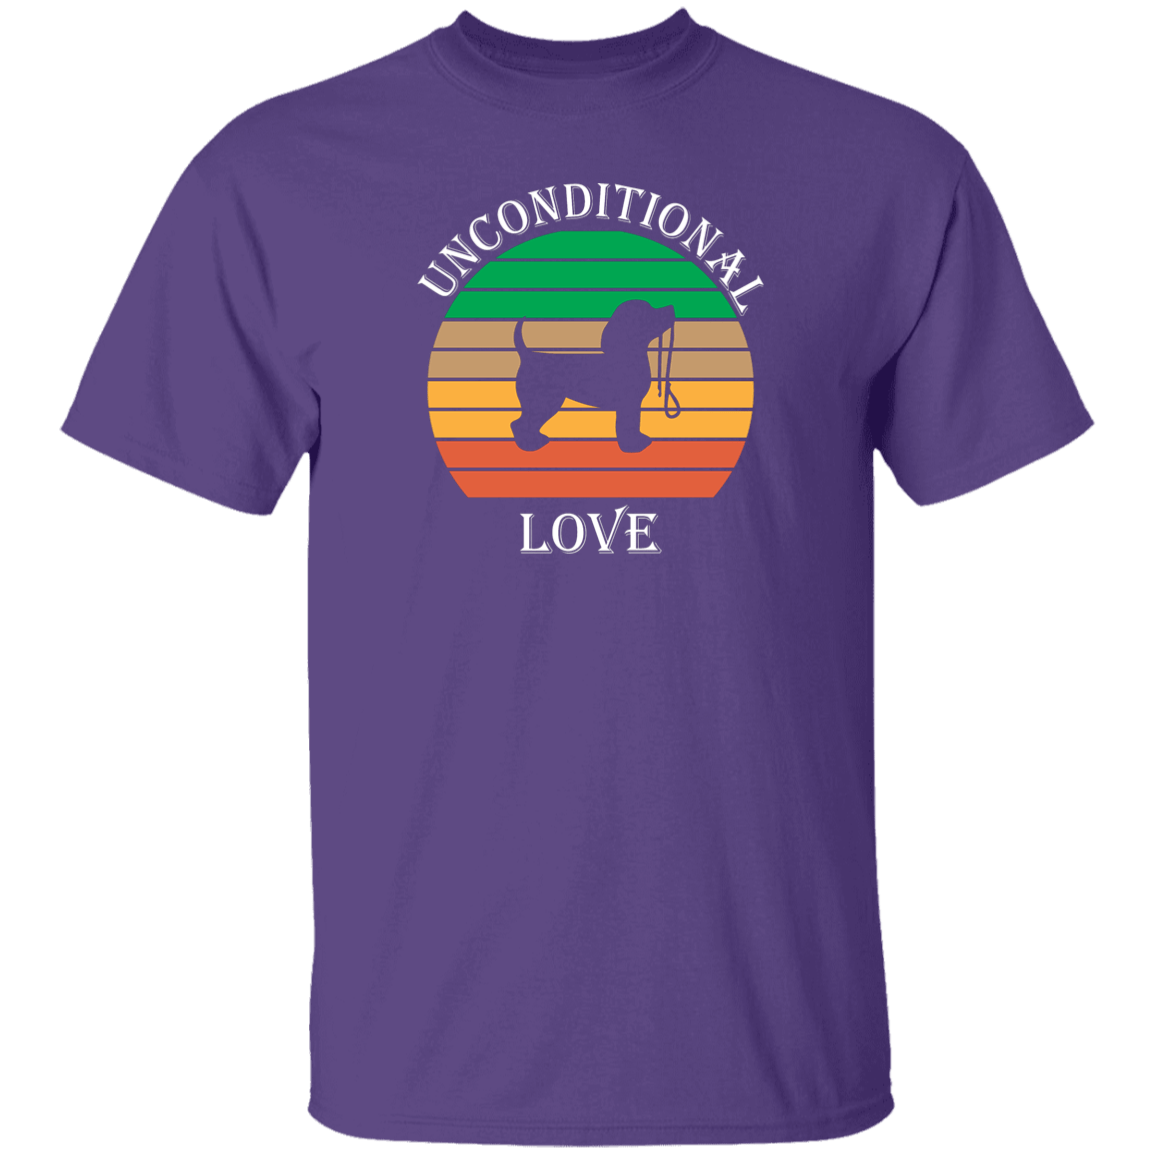 Unconditional Love - T Shirt.